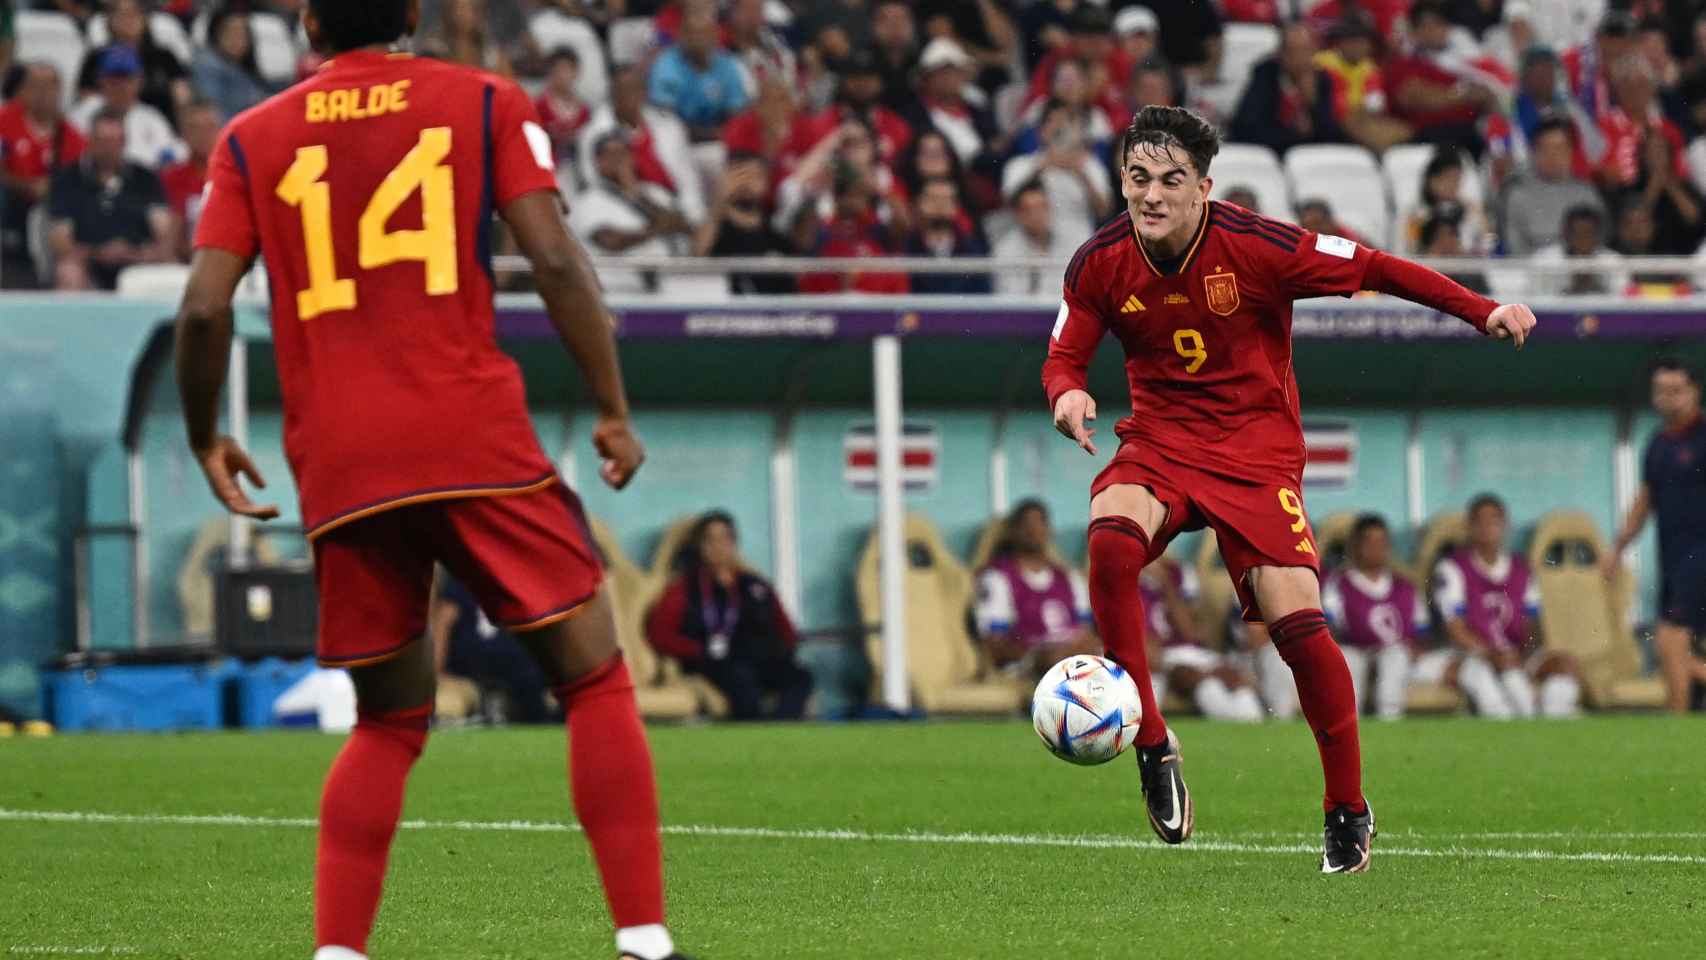 Gavi remata un balón y marca el quinto gol de España a Costa Rica